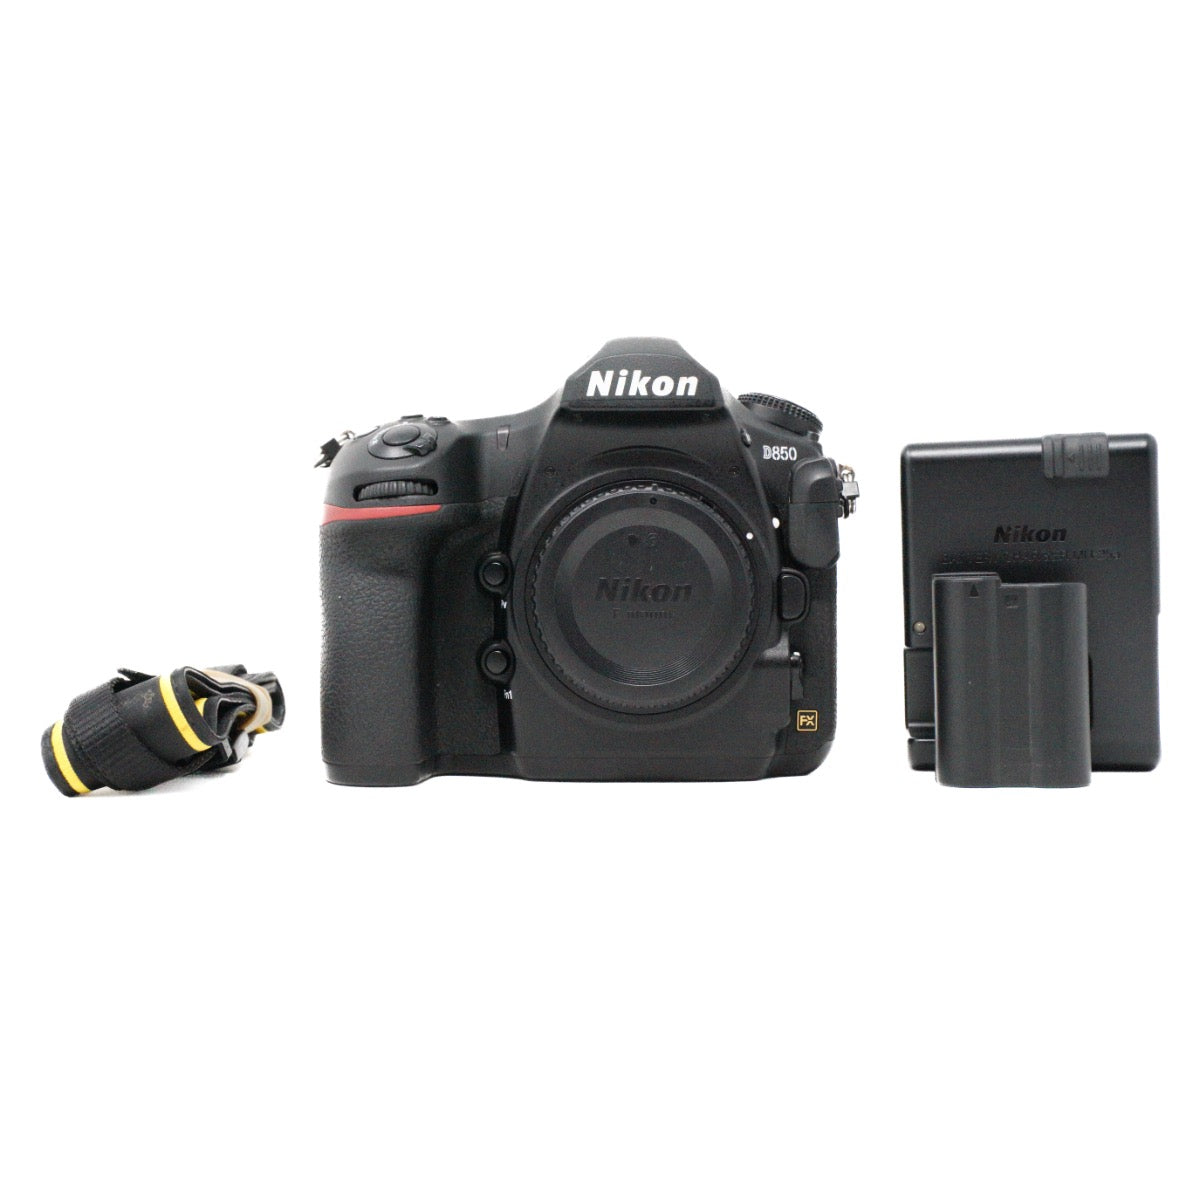 Used Nikon D850 Digital SLR camera